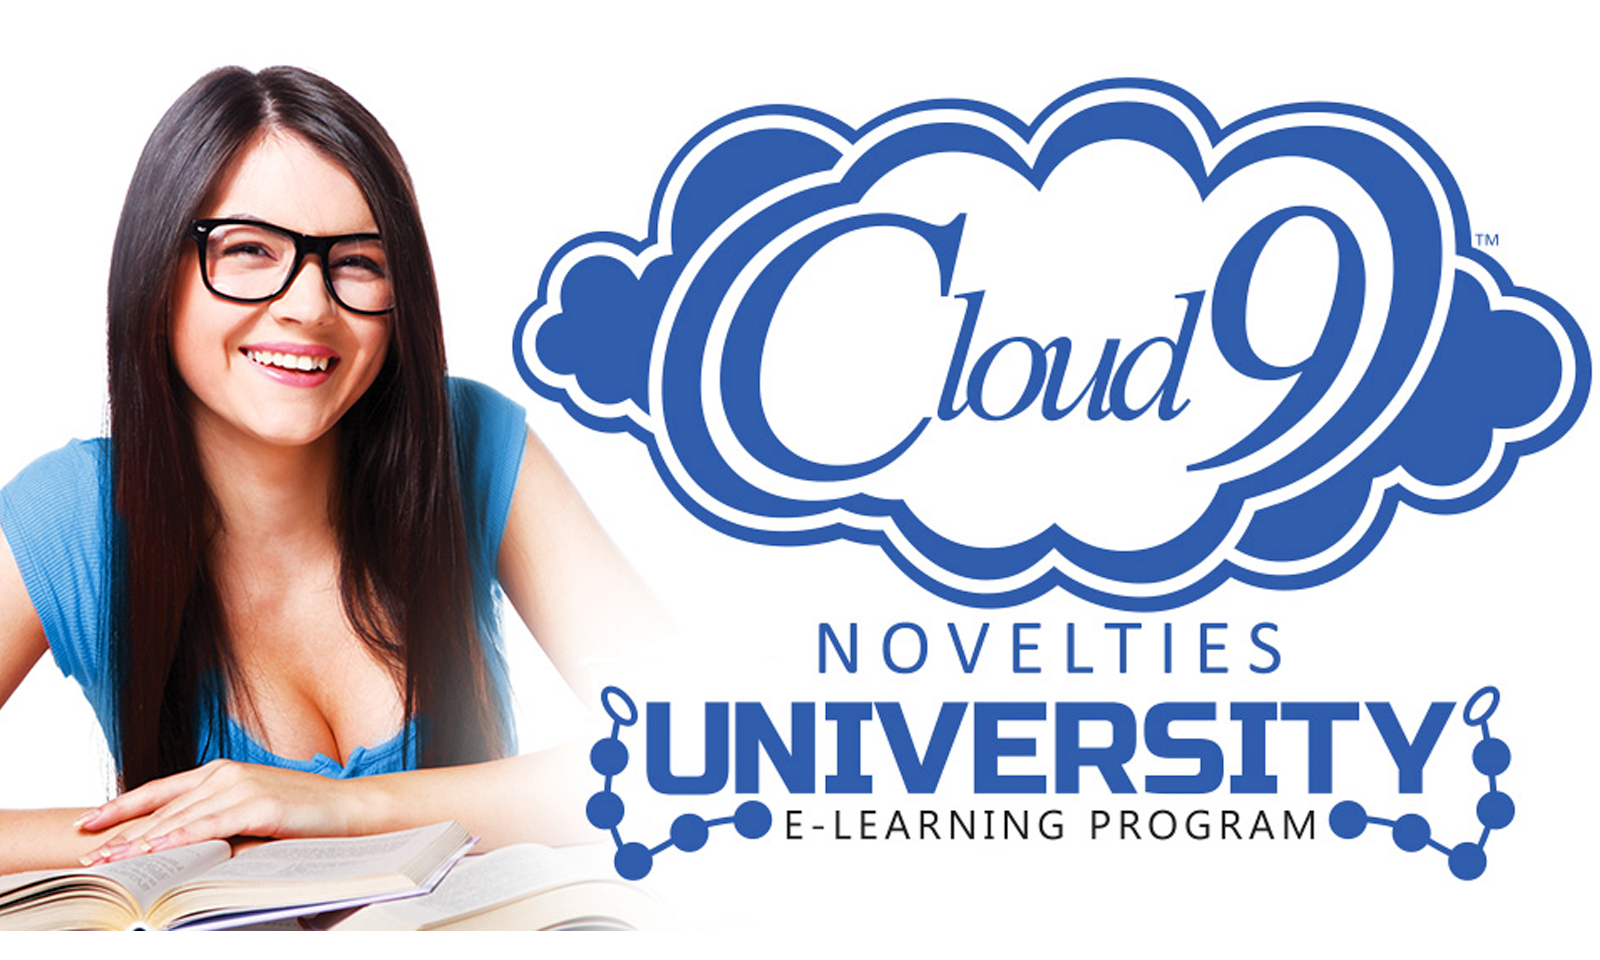 Cloud 9 Novelties Launches New e-Learning Program